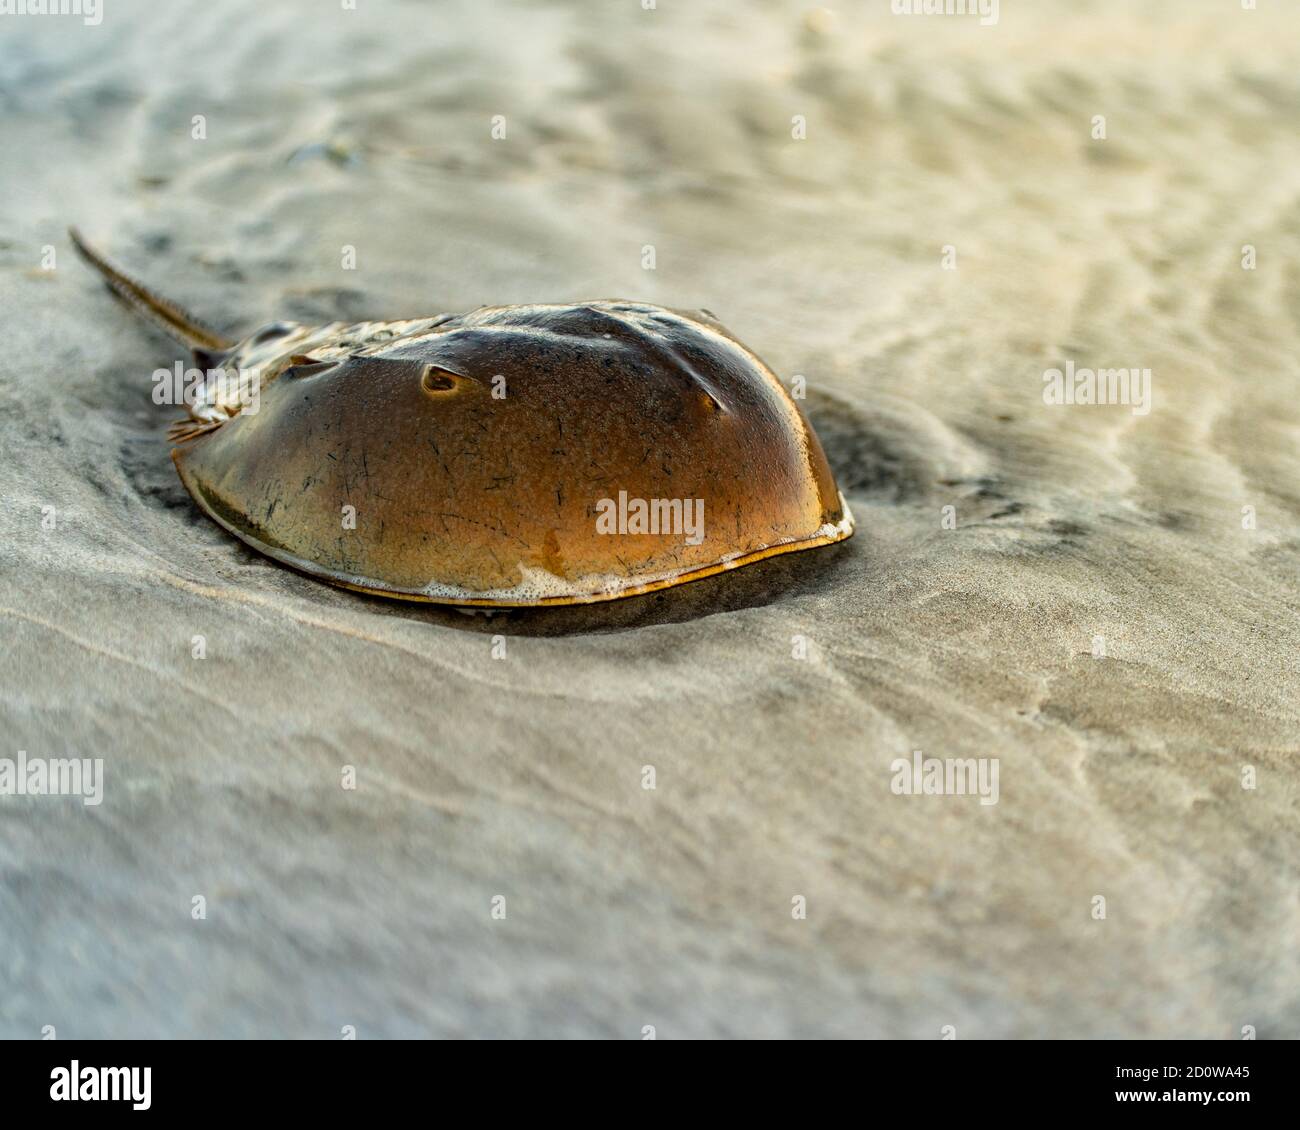 Horseshoe crab on the beach Stock Photo